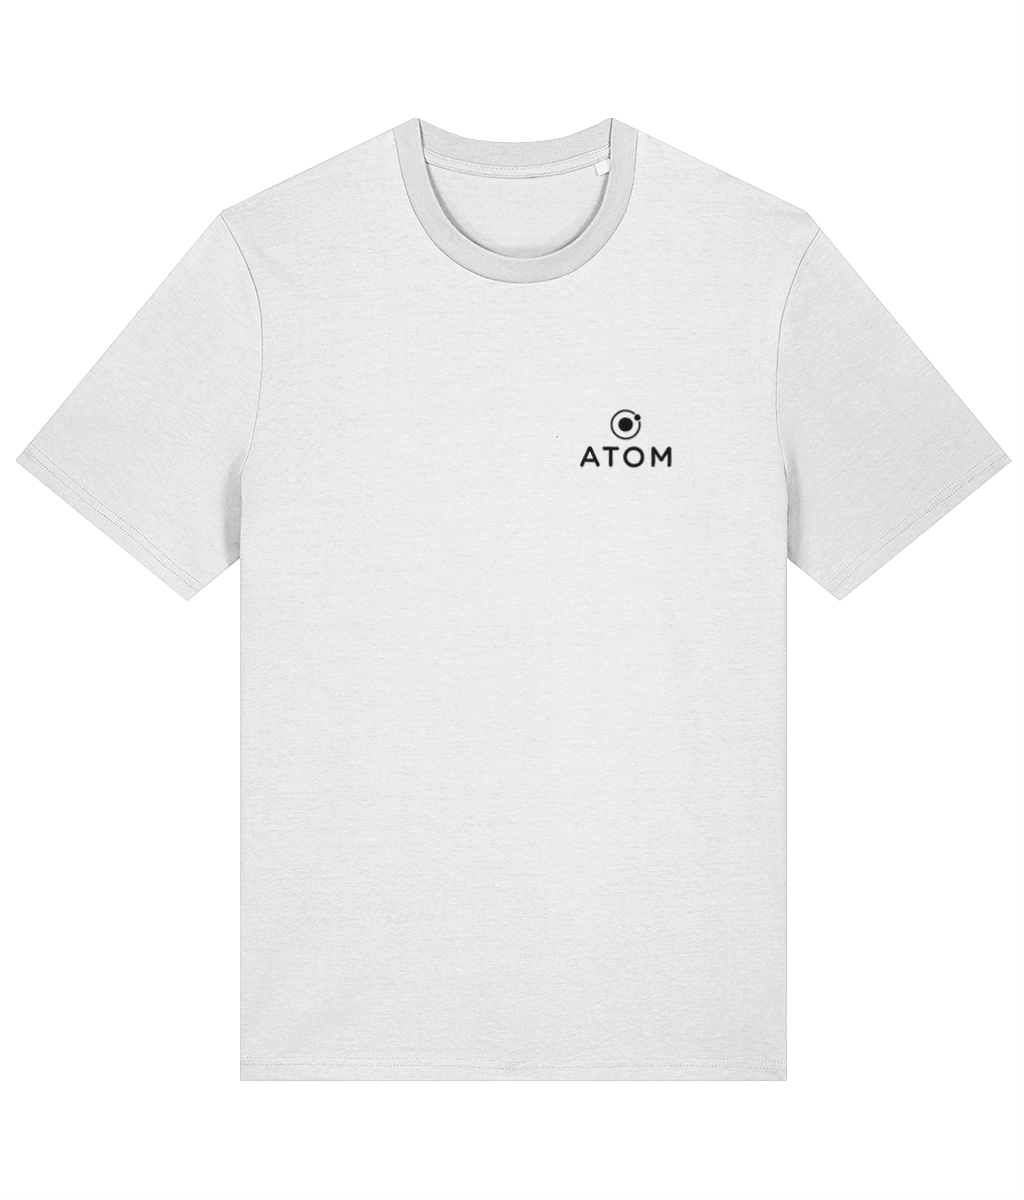 Atom Core White T-shirt - Unisex Organic Cotton